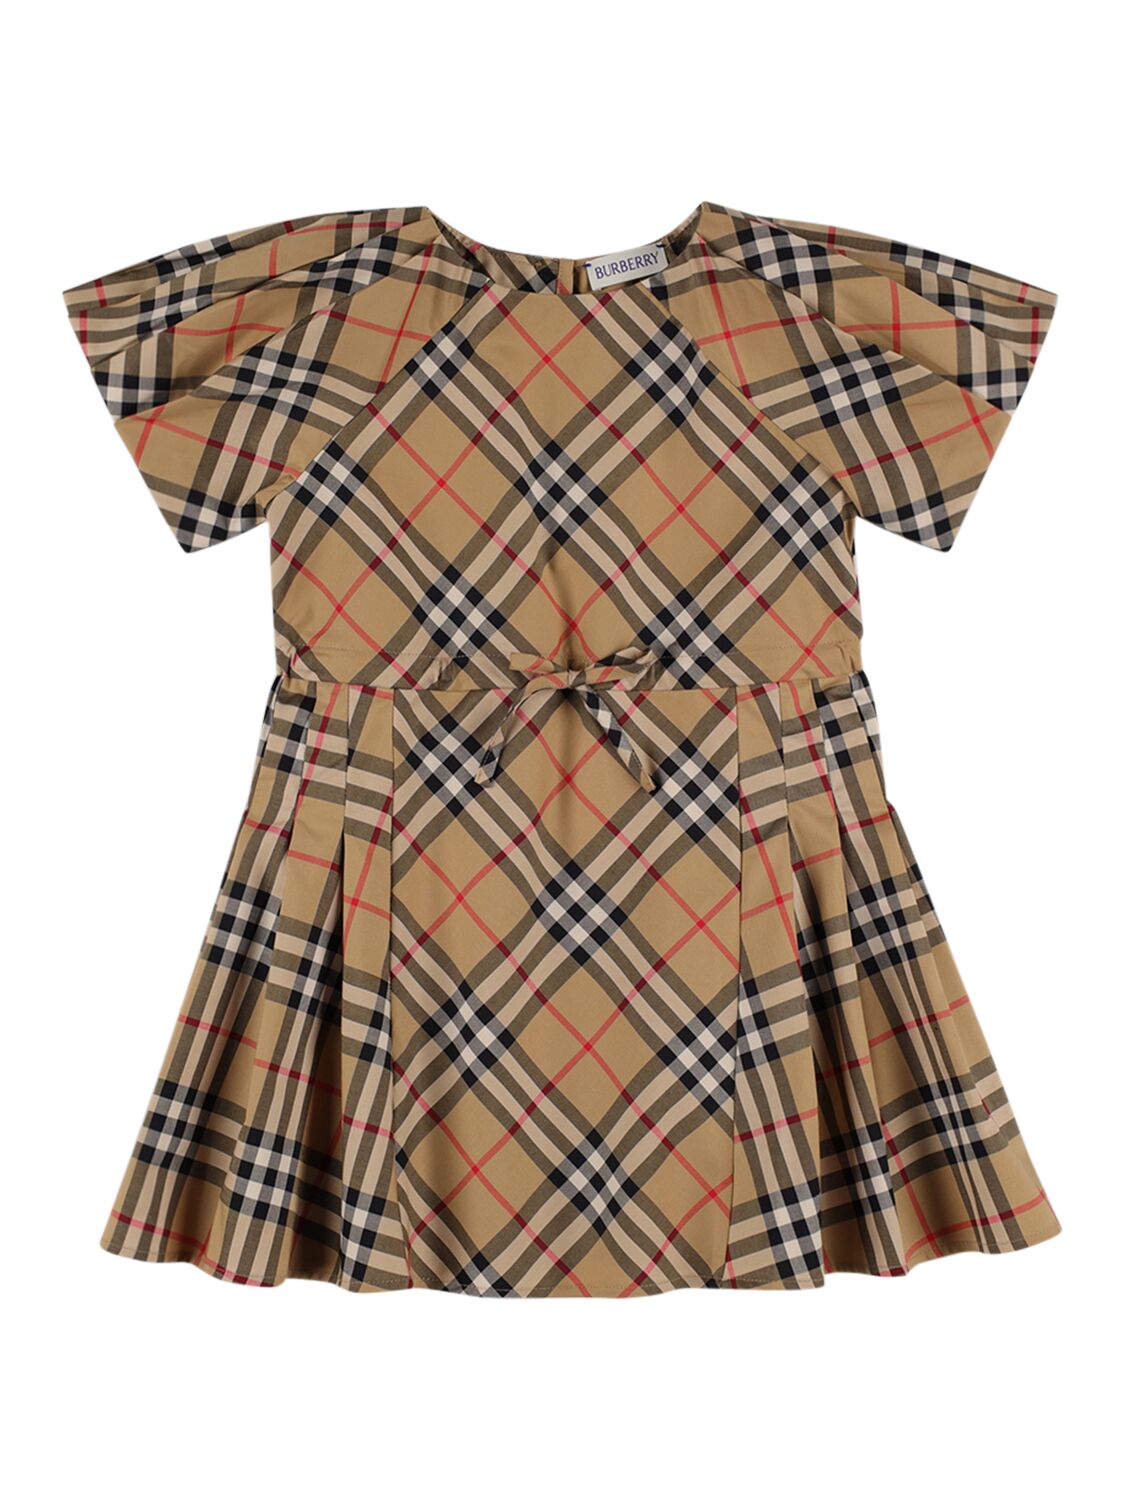 Image of Check Print Cotton Blend Shirt Dress